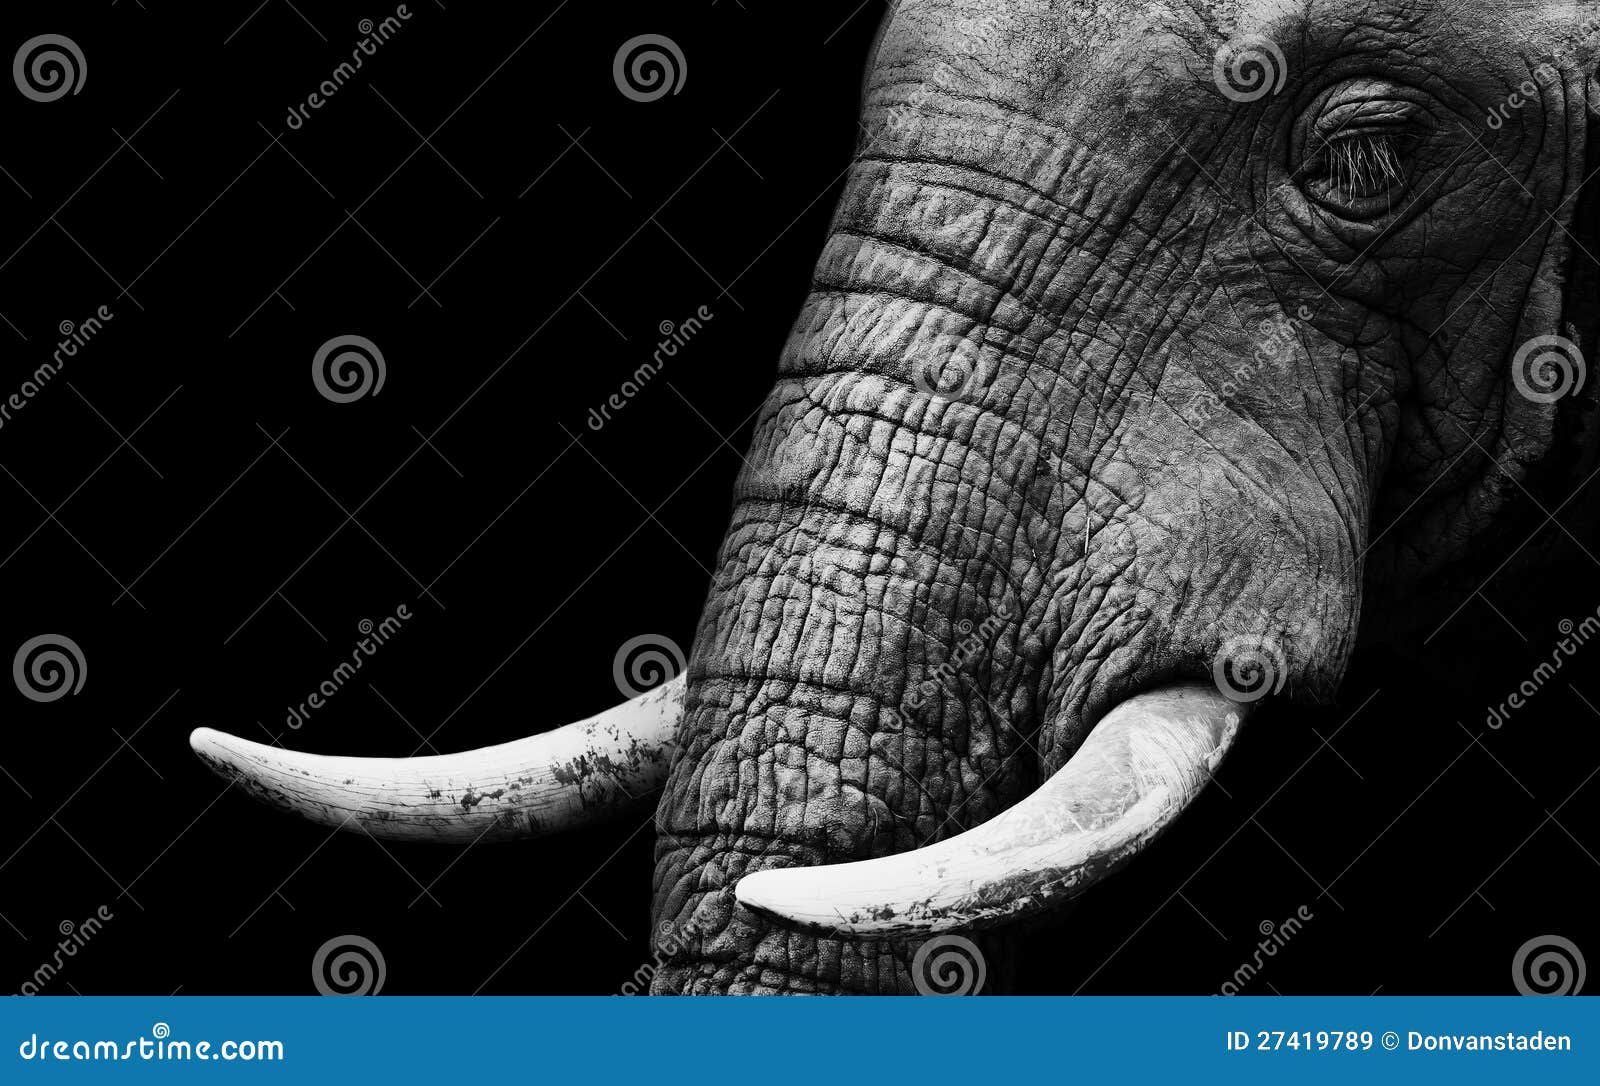 elephant close up